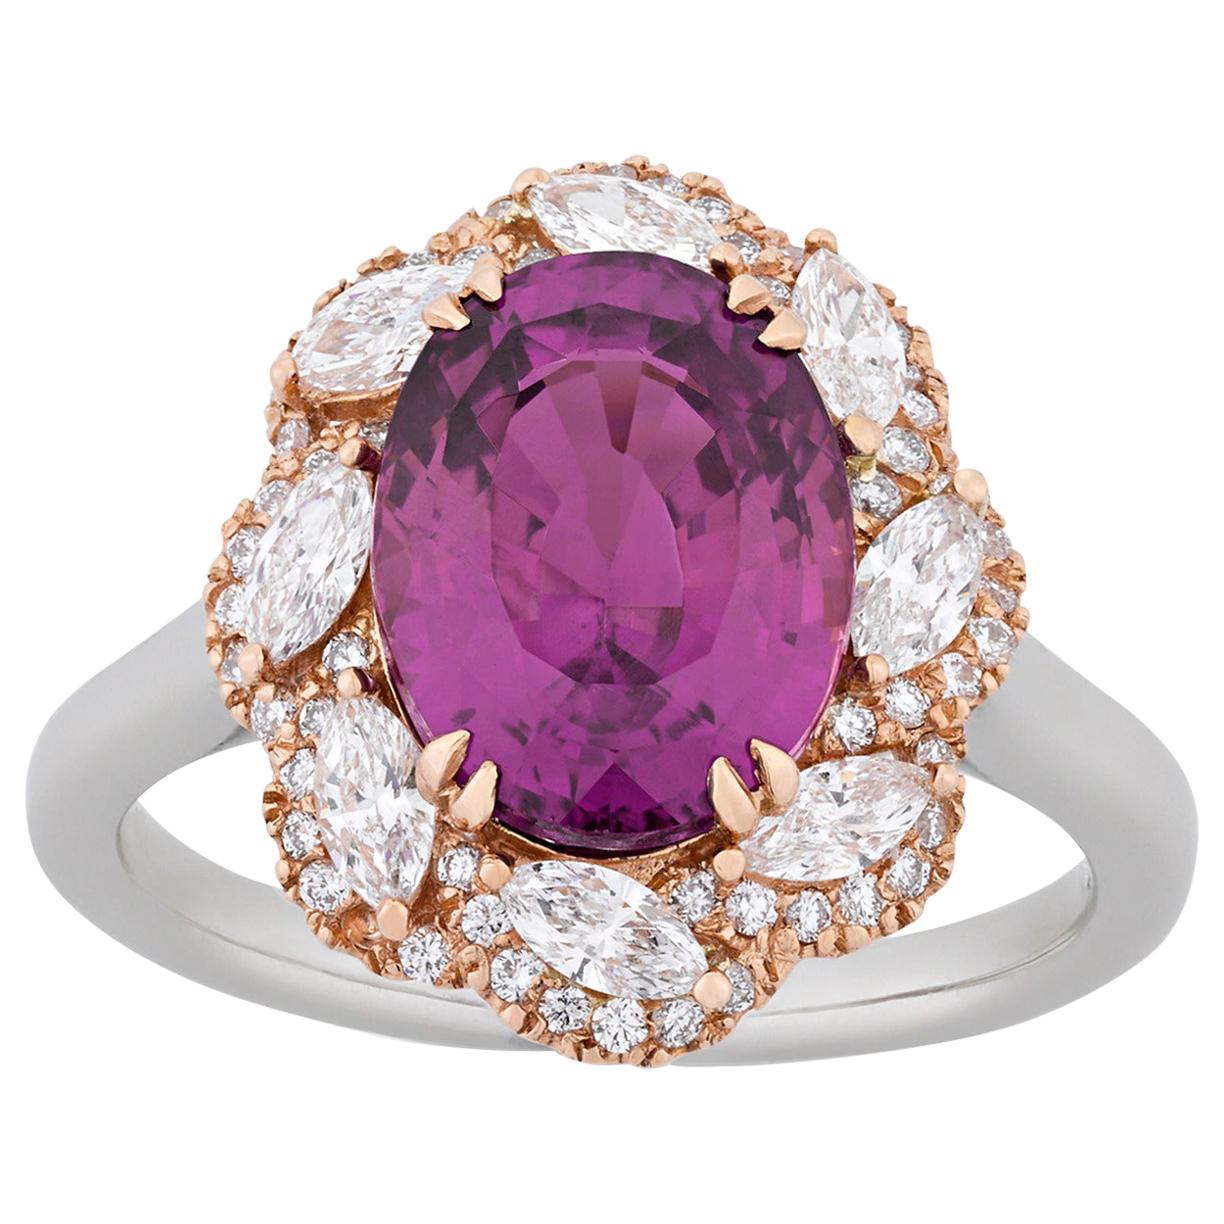 Boysenberry Sapphire and Diamond Ring, 4.44 Carat